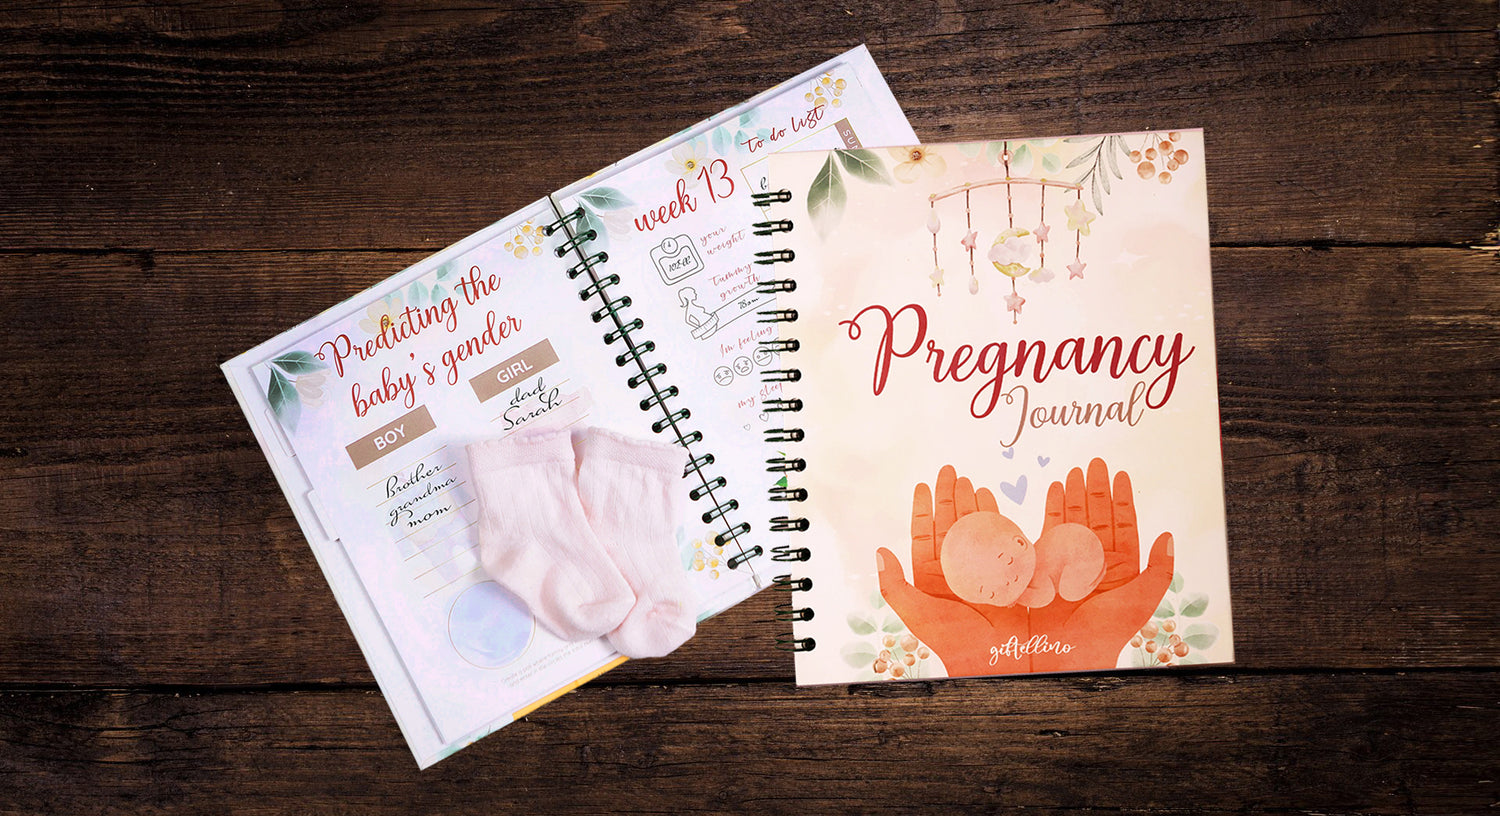 Pregnancy Journals